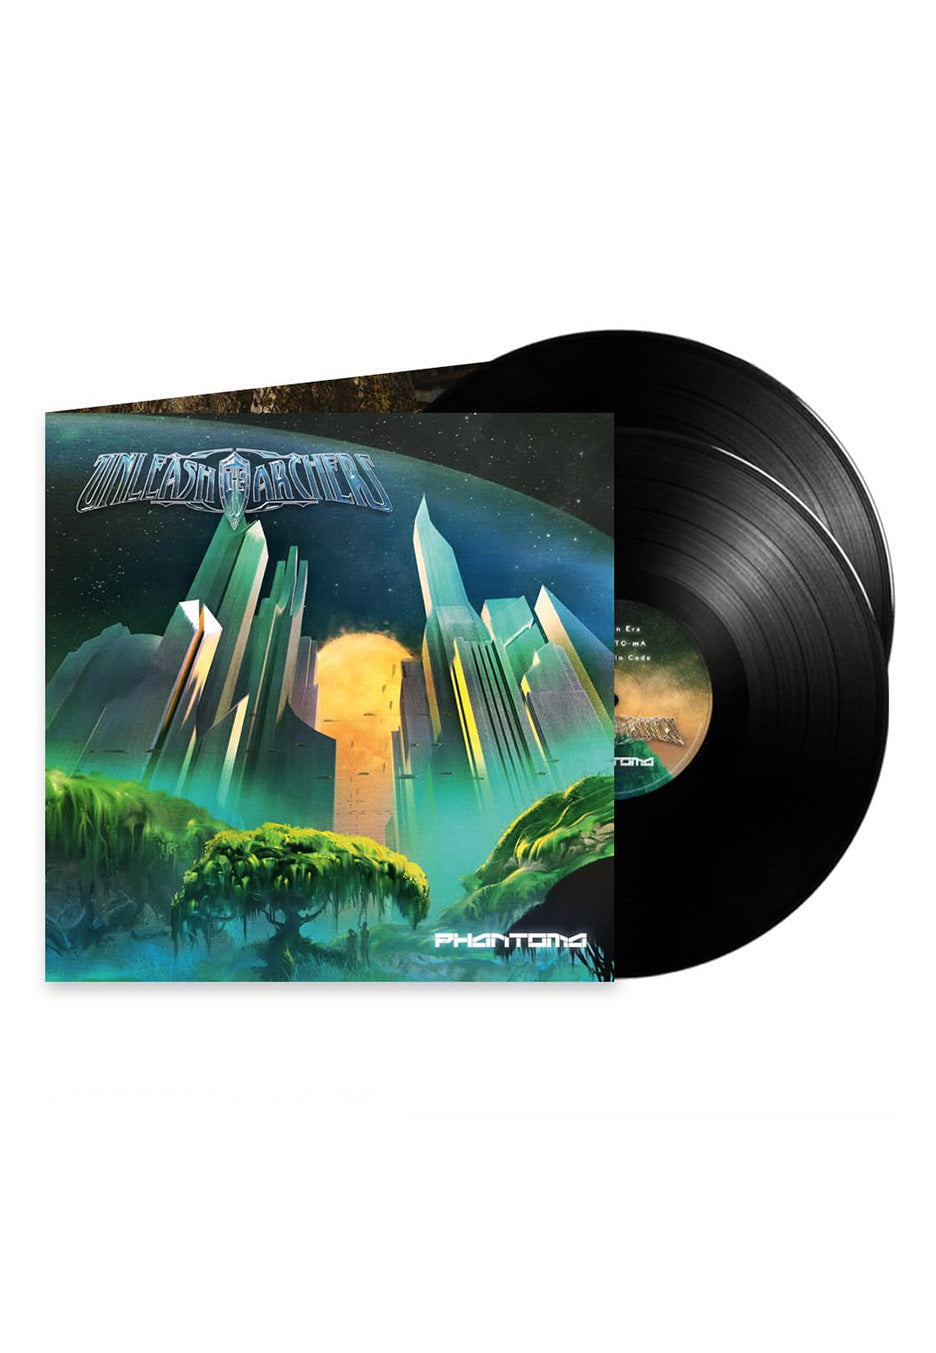 Unleash The Archers - Phantoma - 2 Vinyl